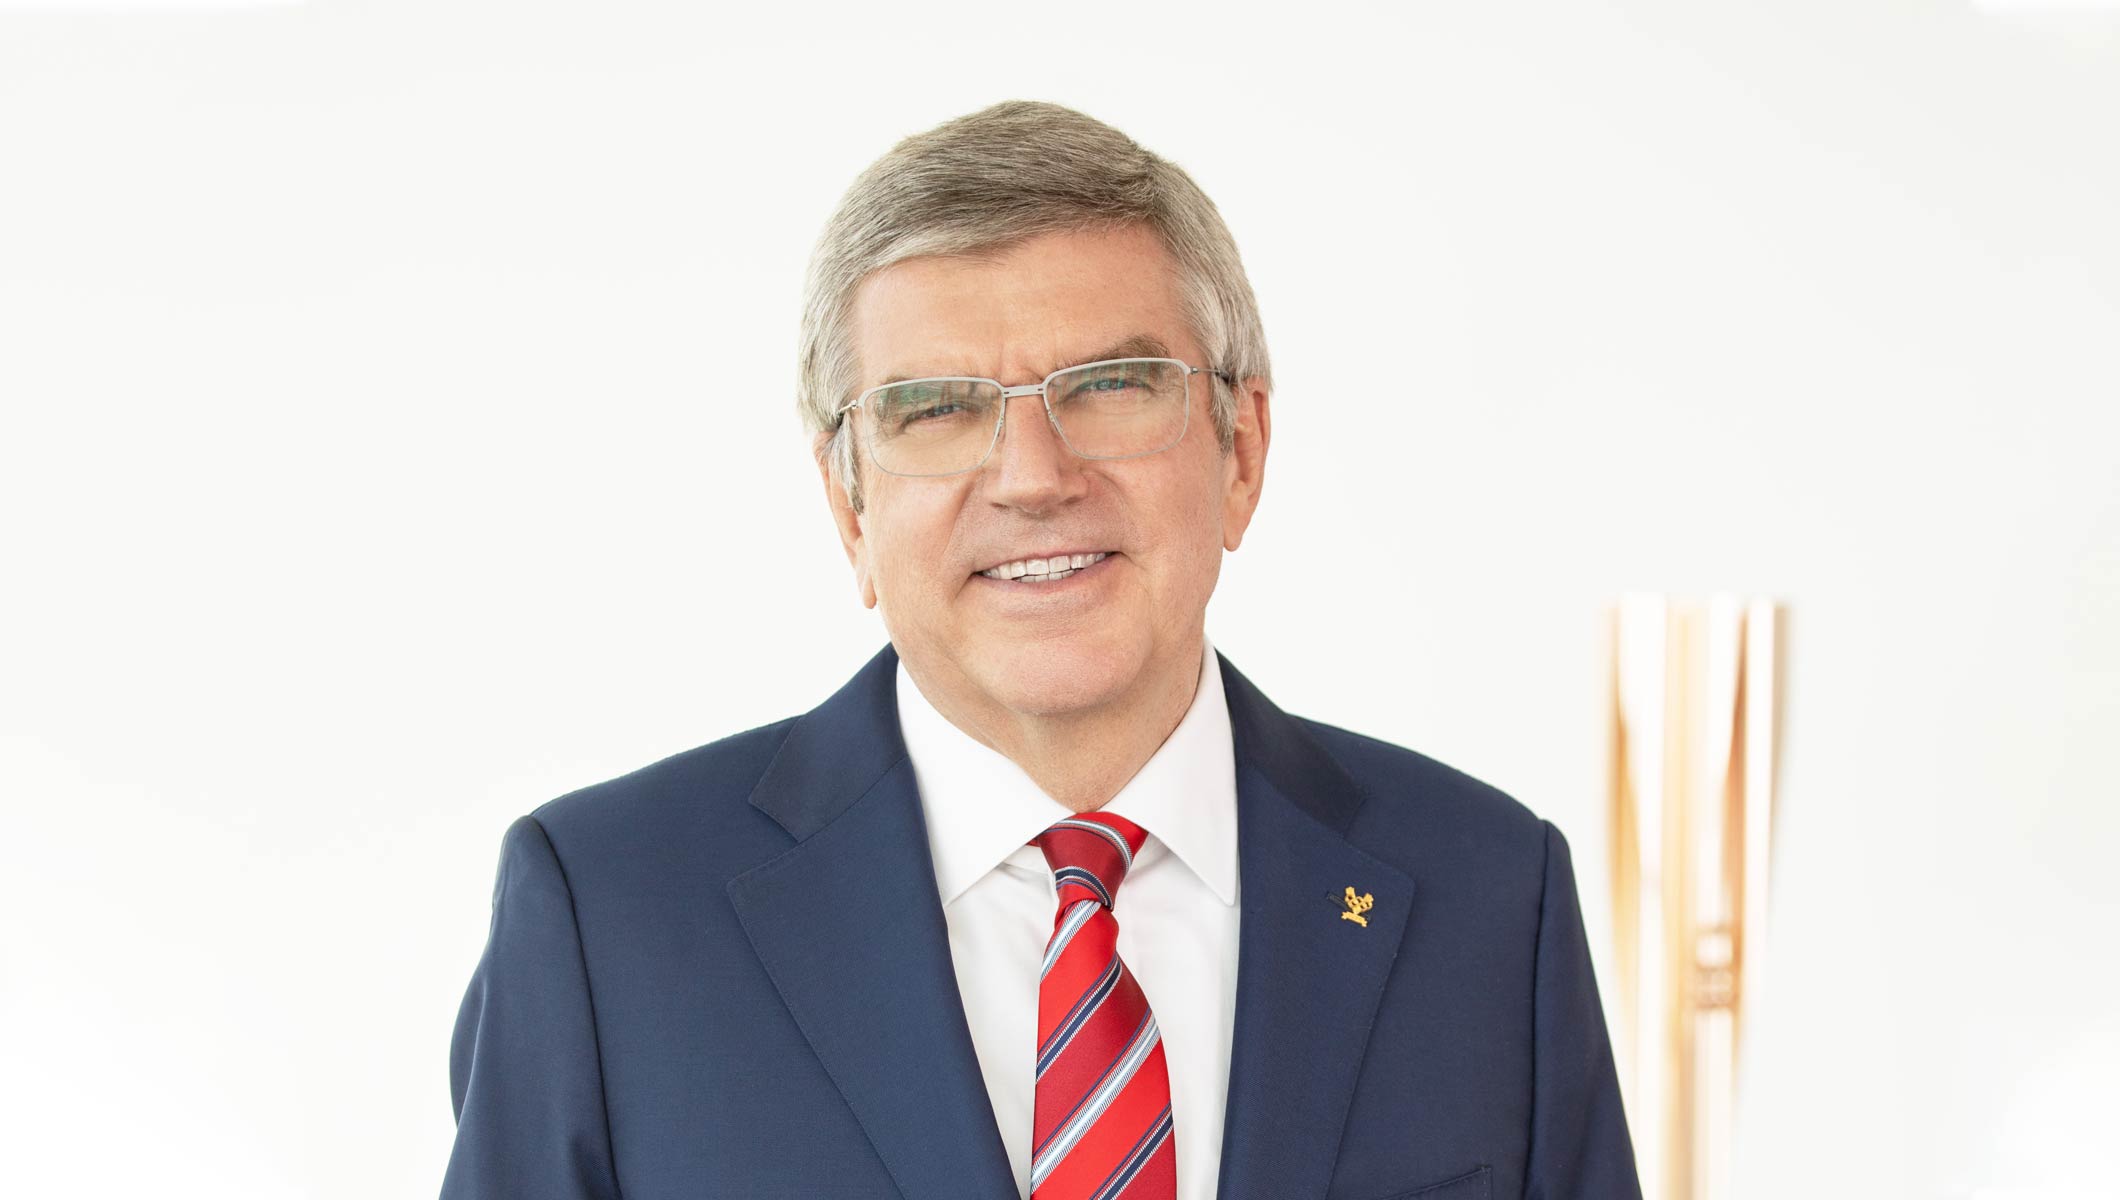 Thomas Bach, President of the IOC